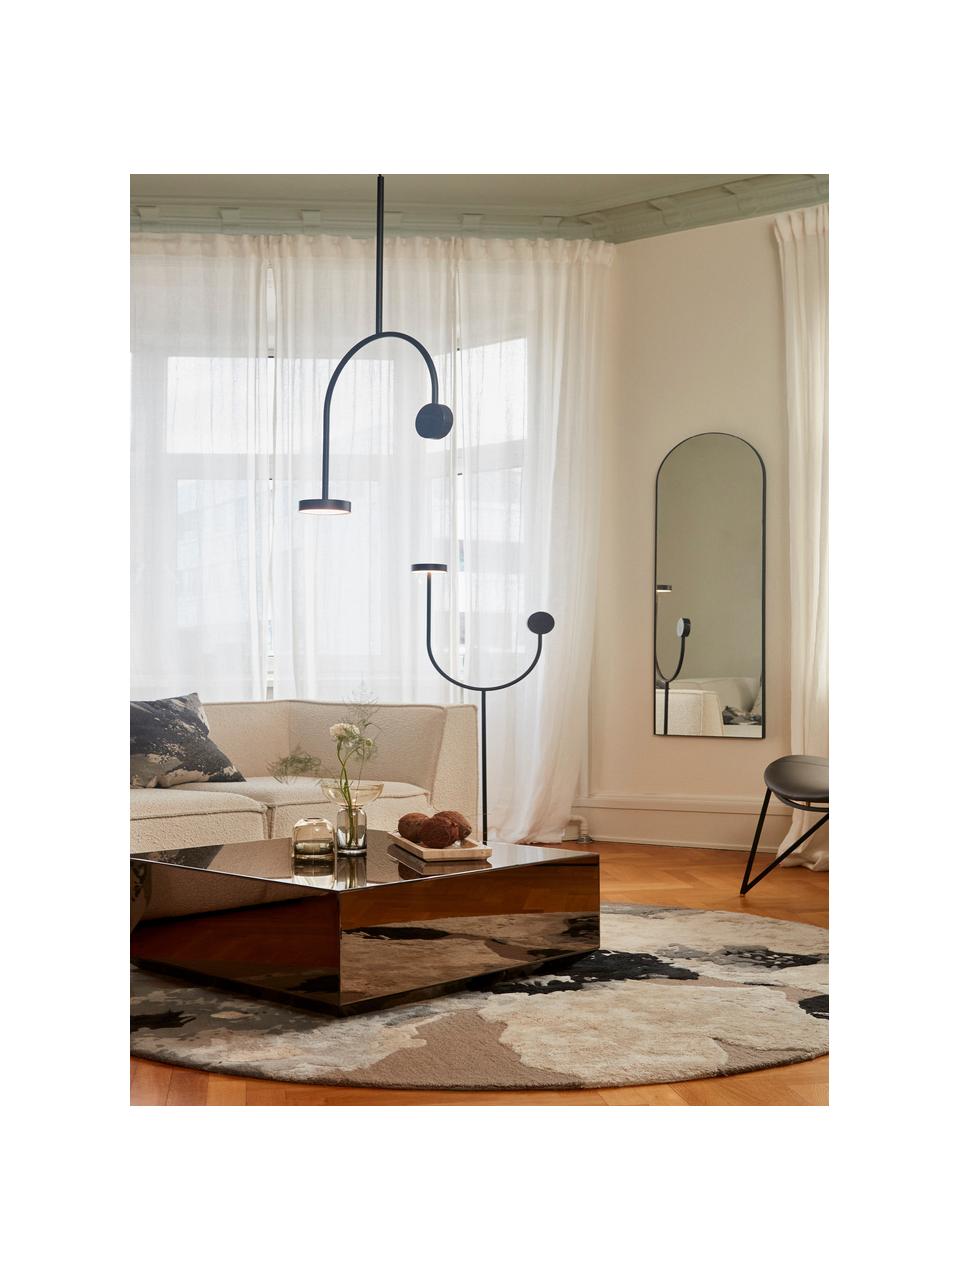 LED hanglamp Grasil van marmer, Frame: gecoat metaal, Decoratie: marmer, Zwart, gemarmerd, B 56 x H 97 cm